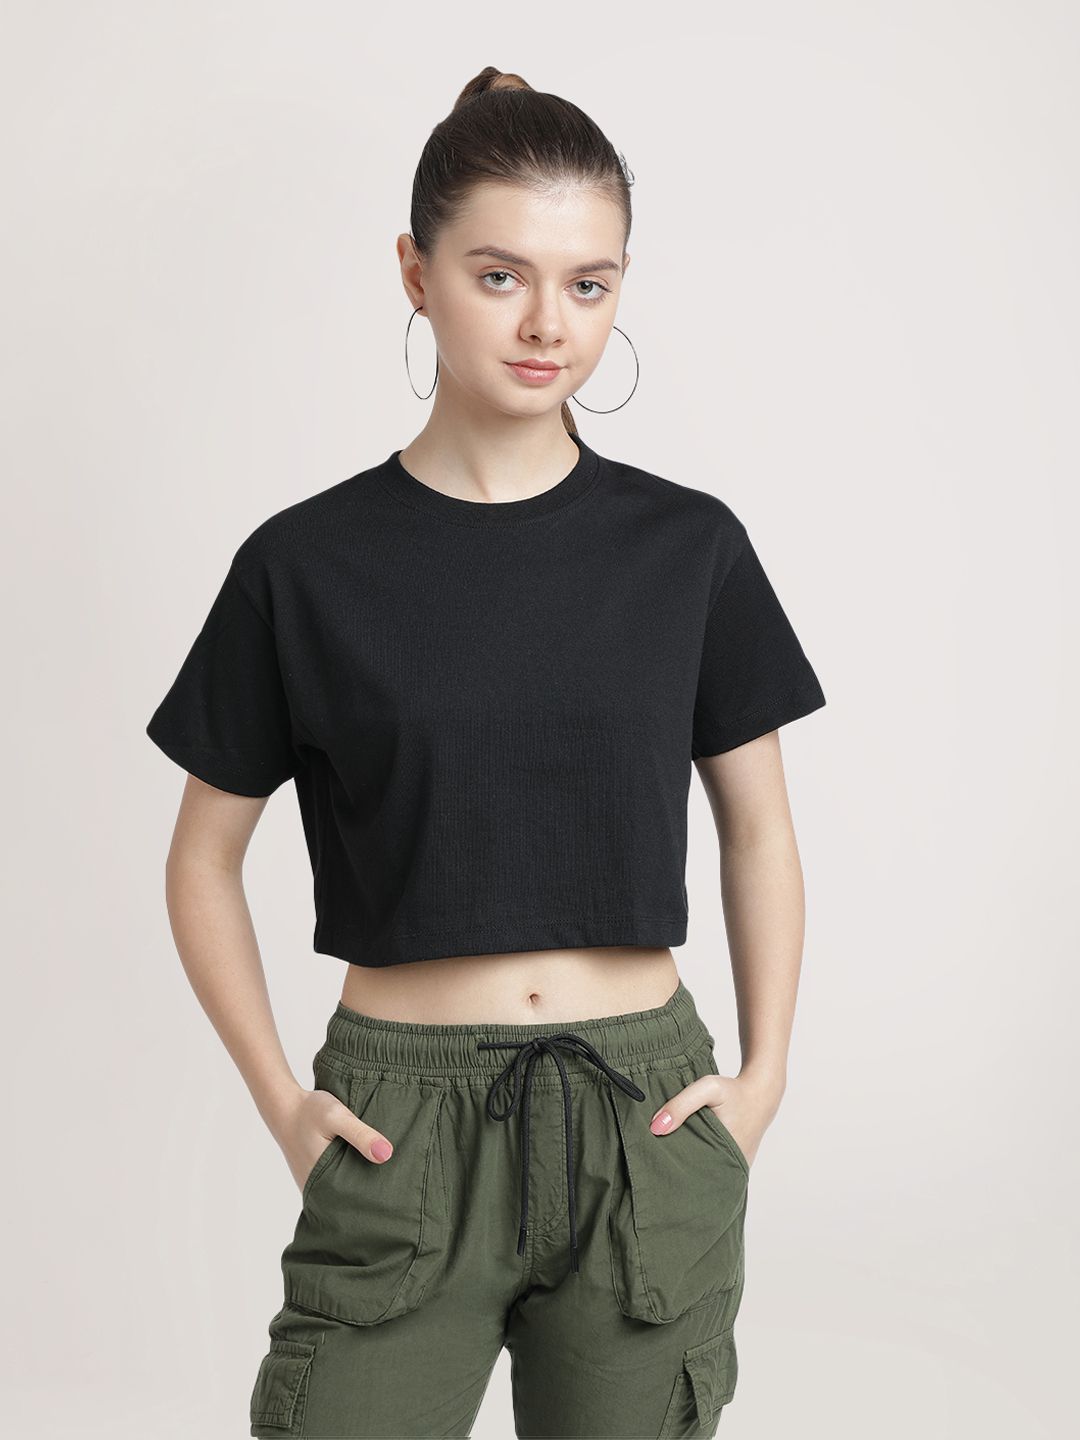     			Bene Kleed Black Cotton Blend Regular Fit Women's T-Shirt ( Pack of 1 )